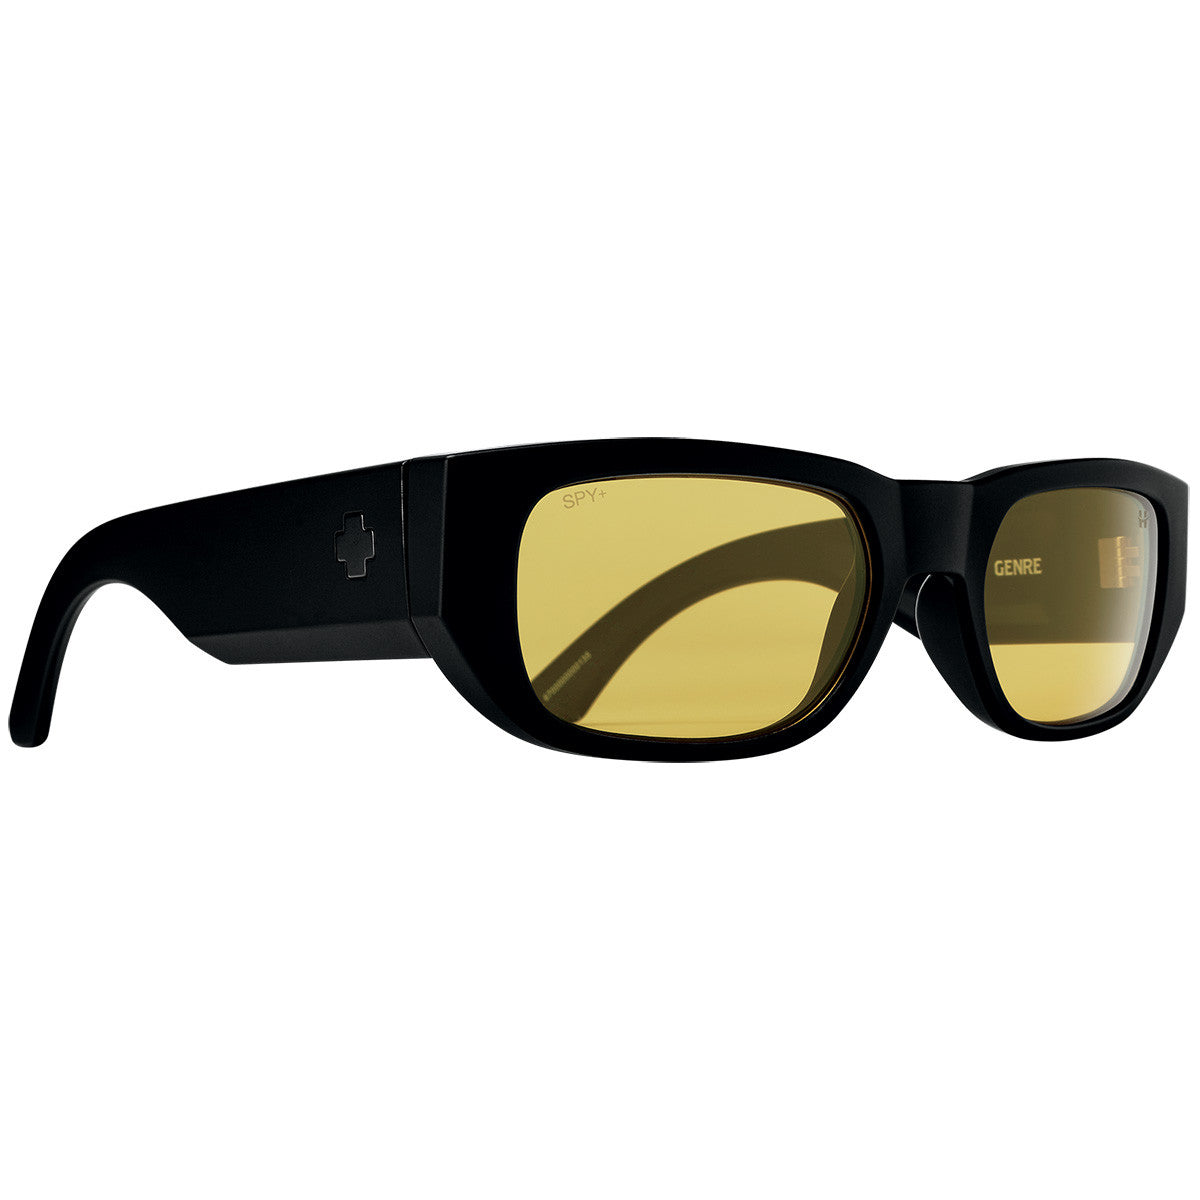 Spy Genre Sunglasses  Matte Black 54-20-143 M-L 54-61